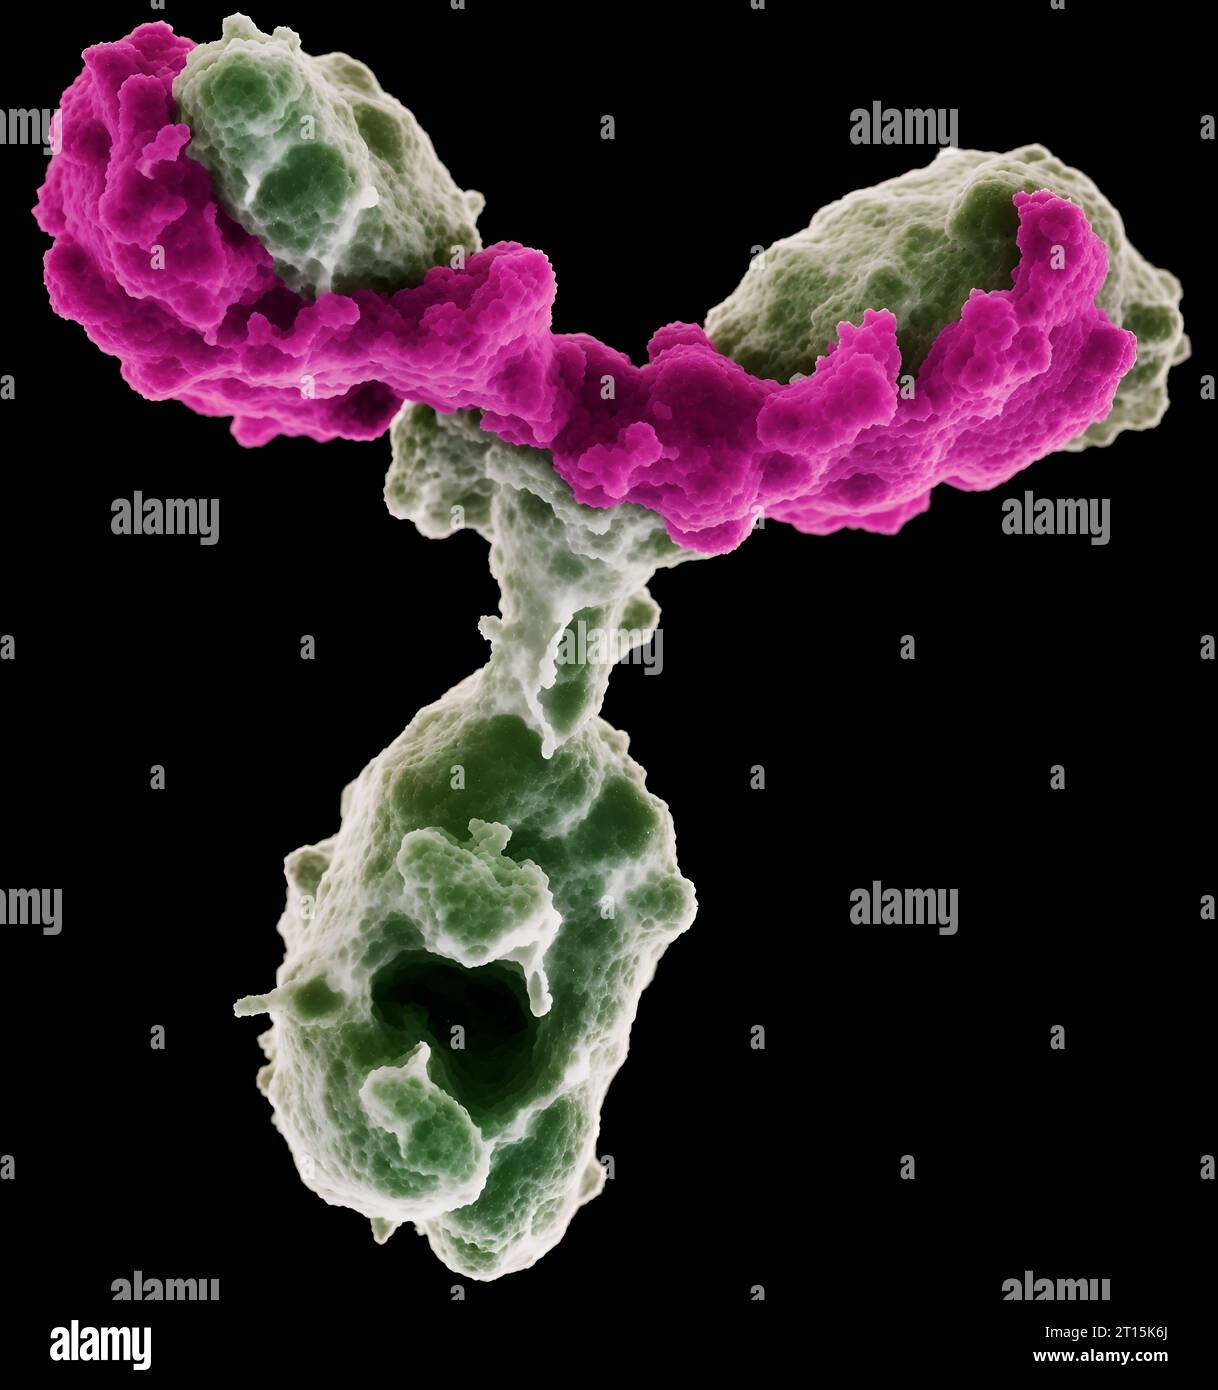 A detailed close-up of a human microbiology antibody. Stock Photo